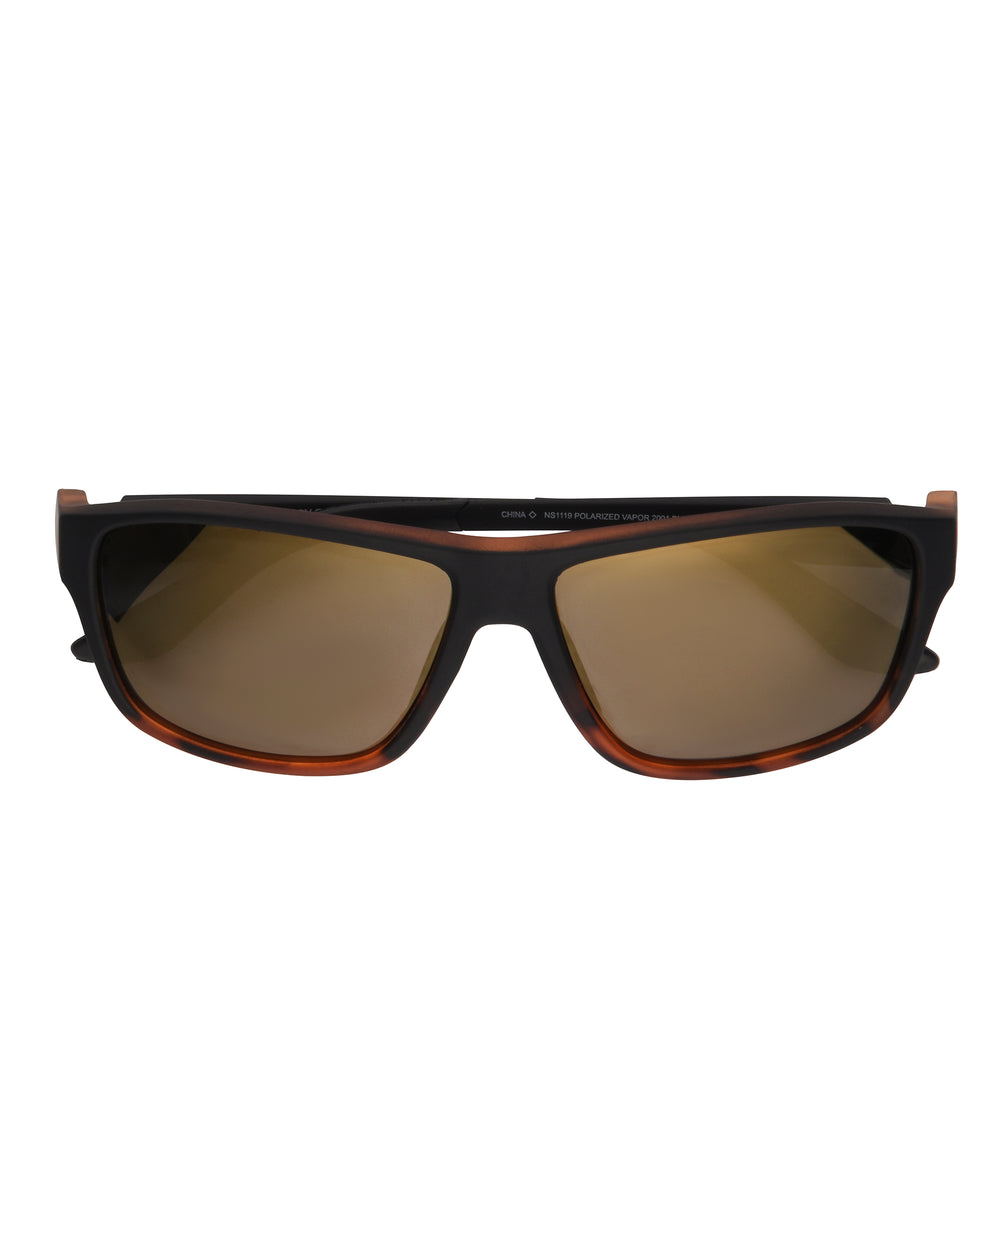 Body Glove Boys' Tidal WRAP Sunglasses, Black, 55 mm